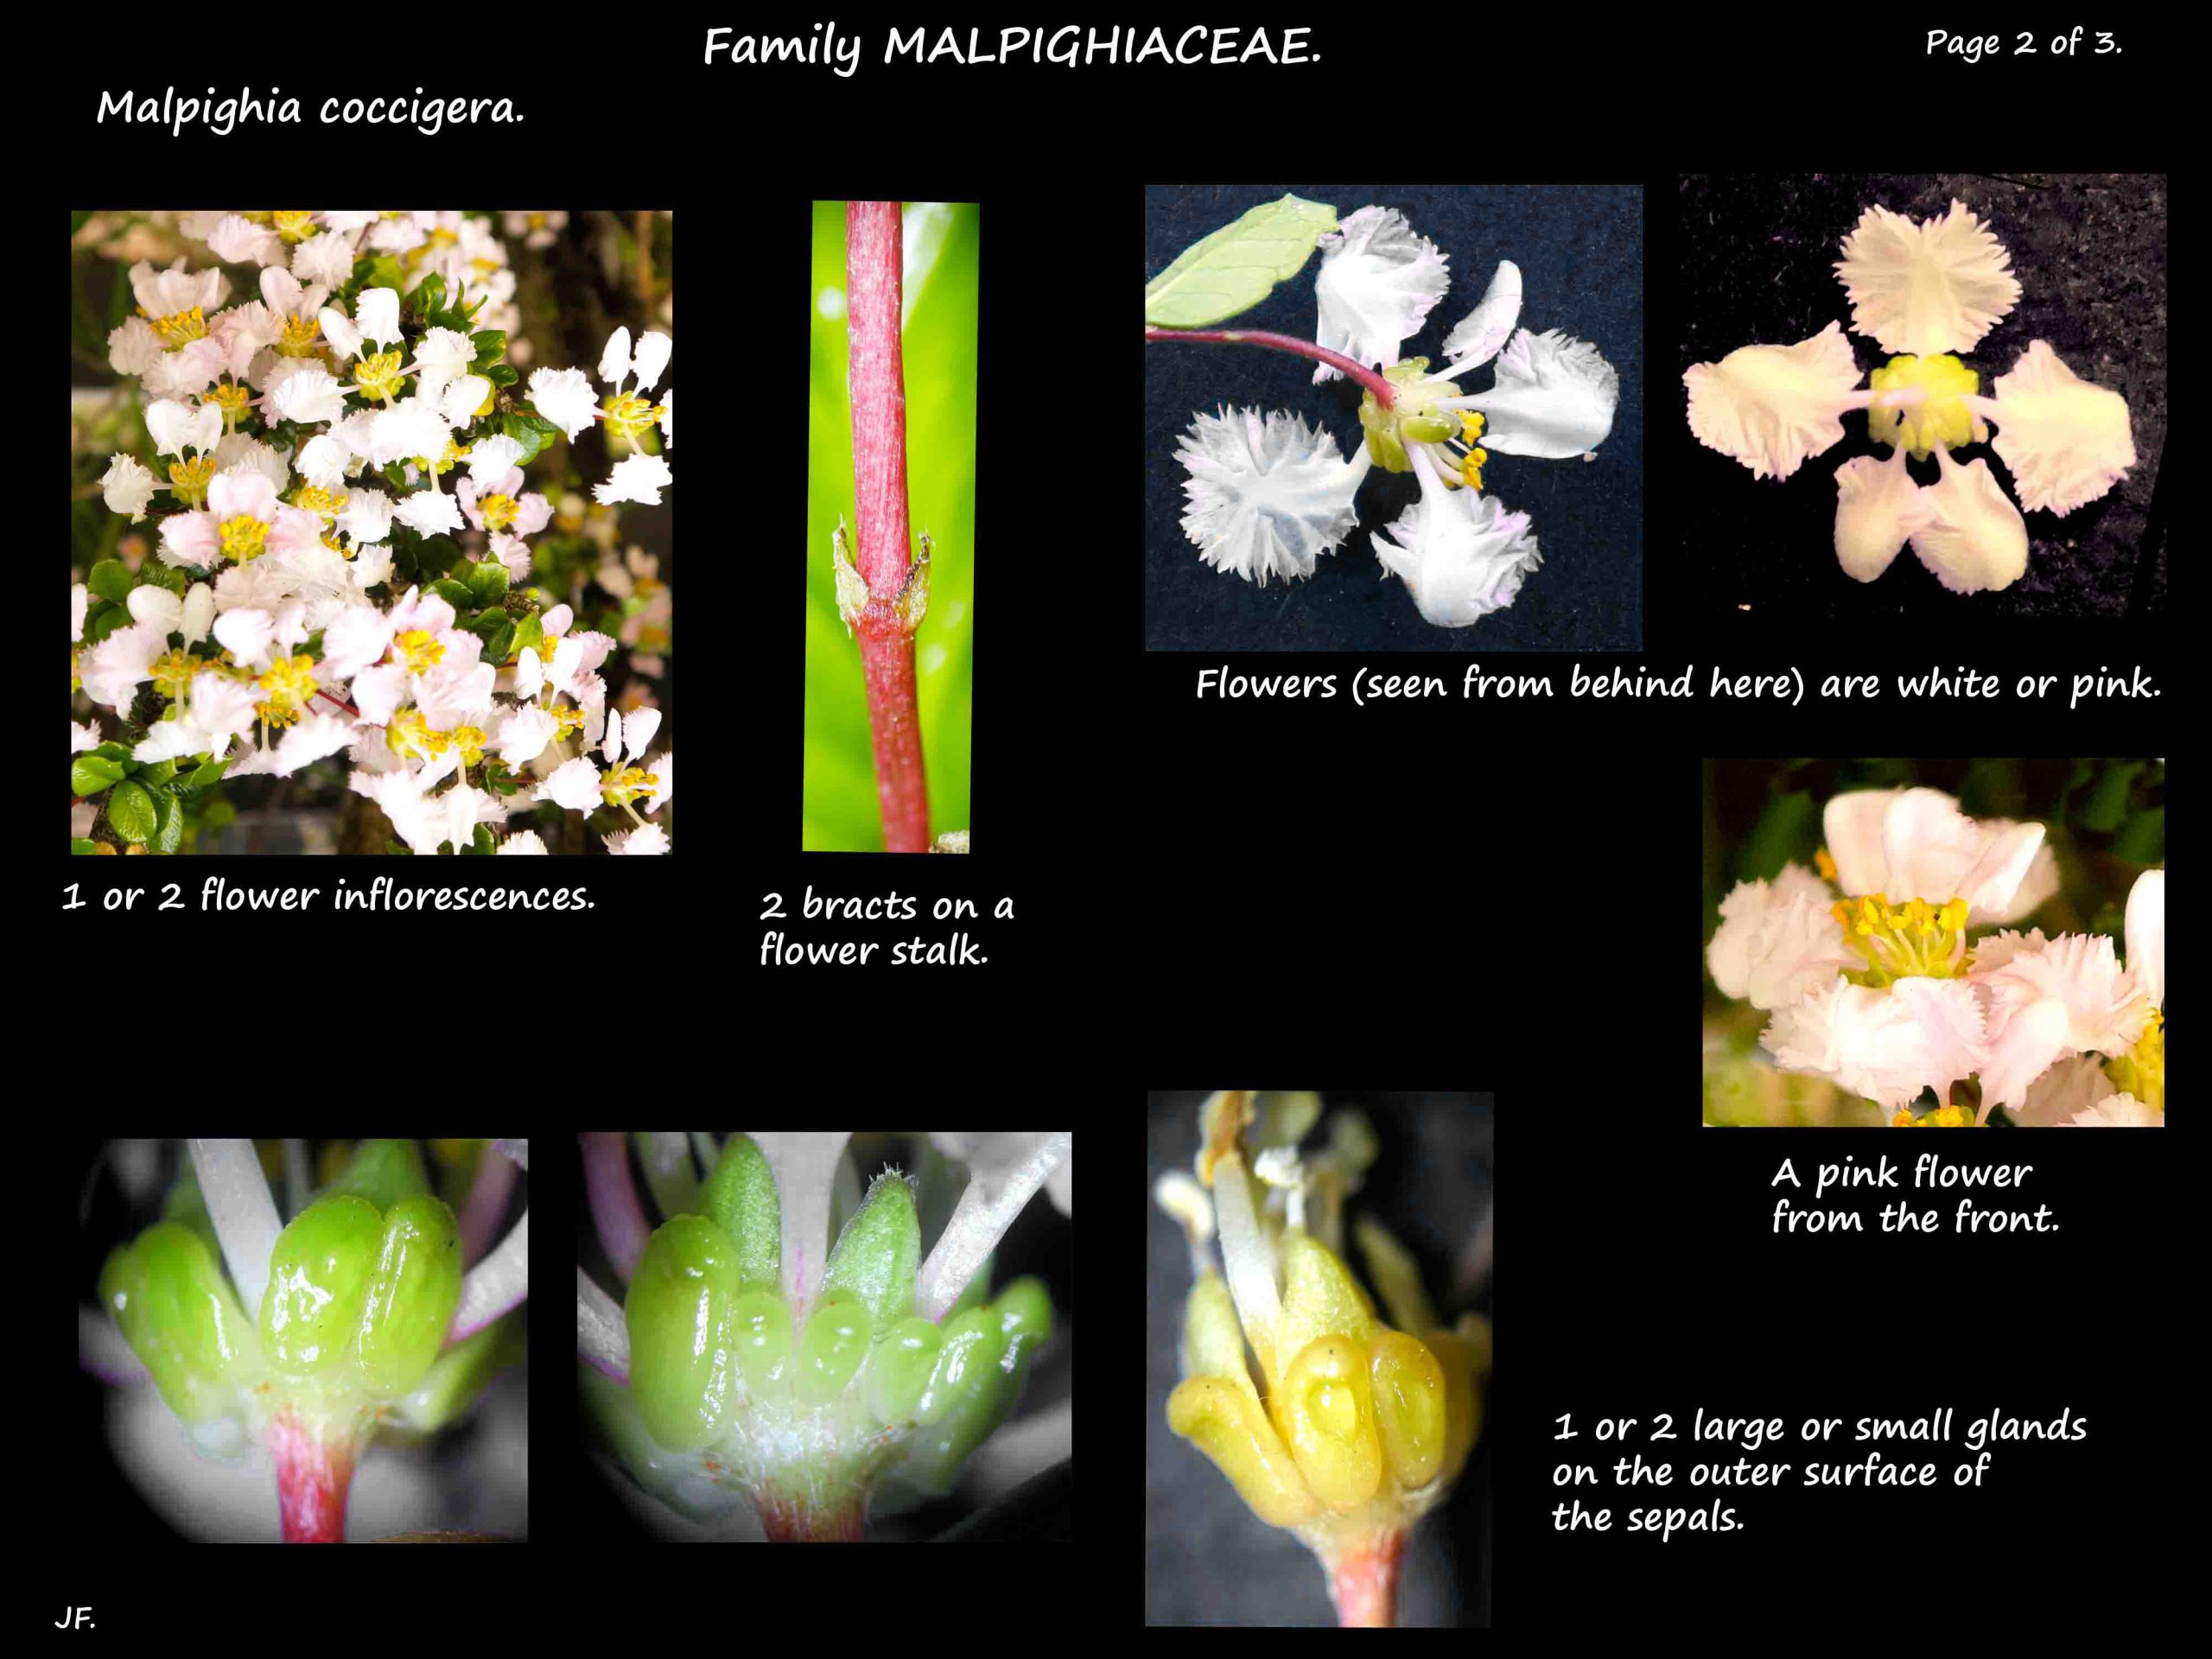 2 Flowers & sepal glands of Malpighia coccigera